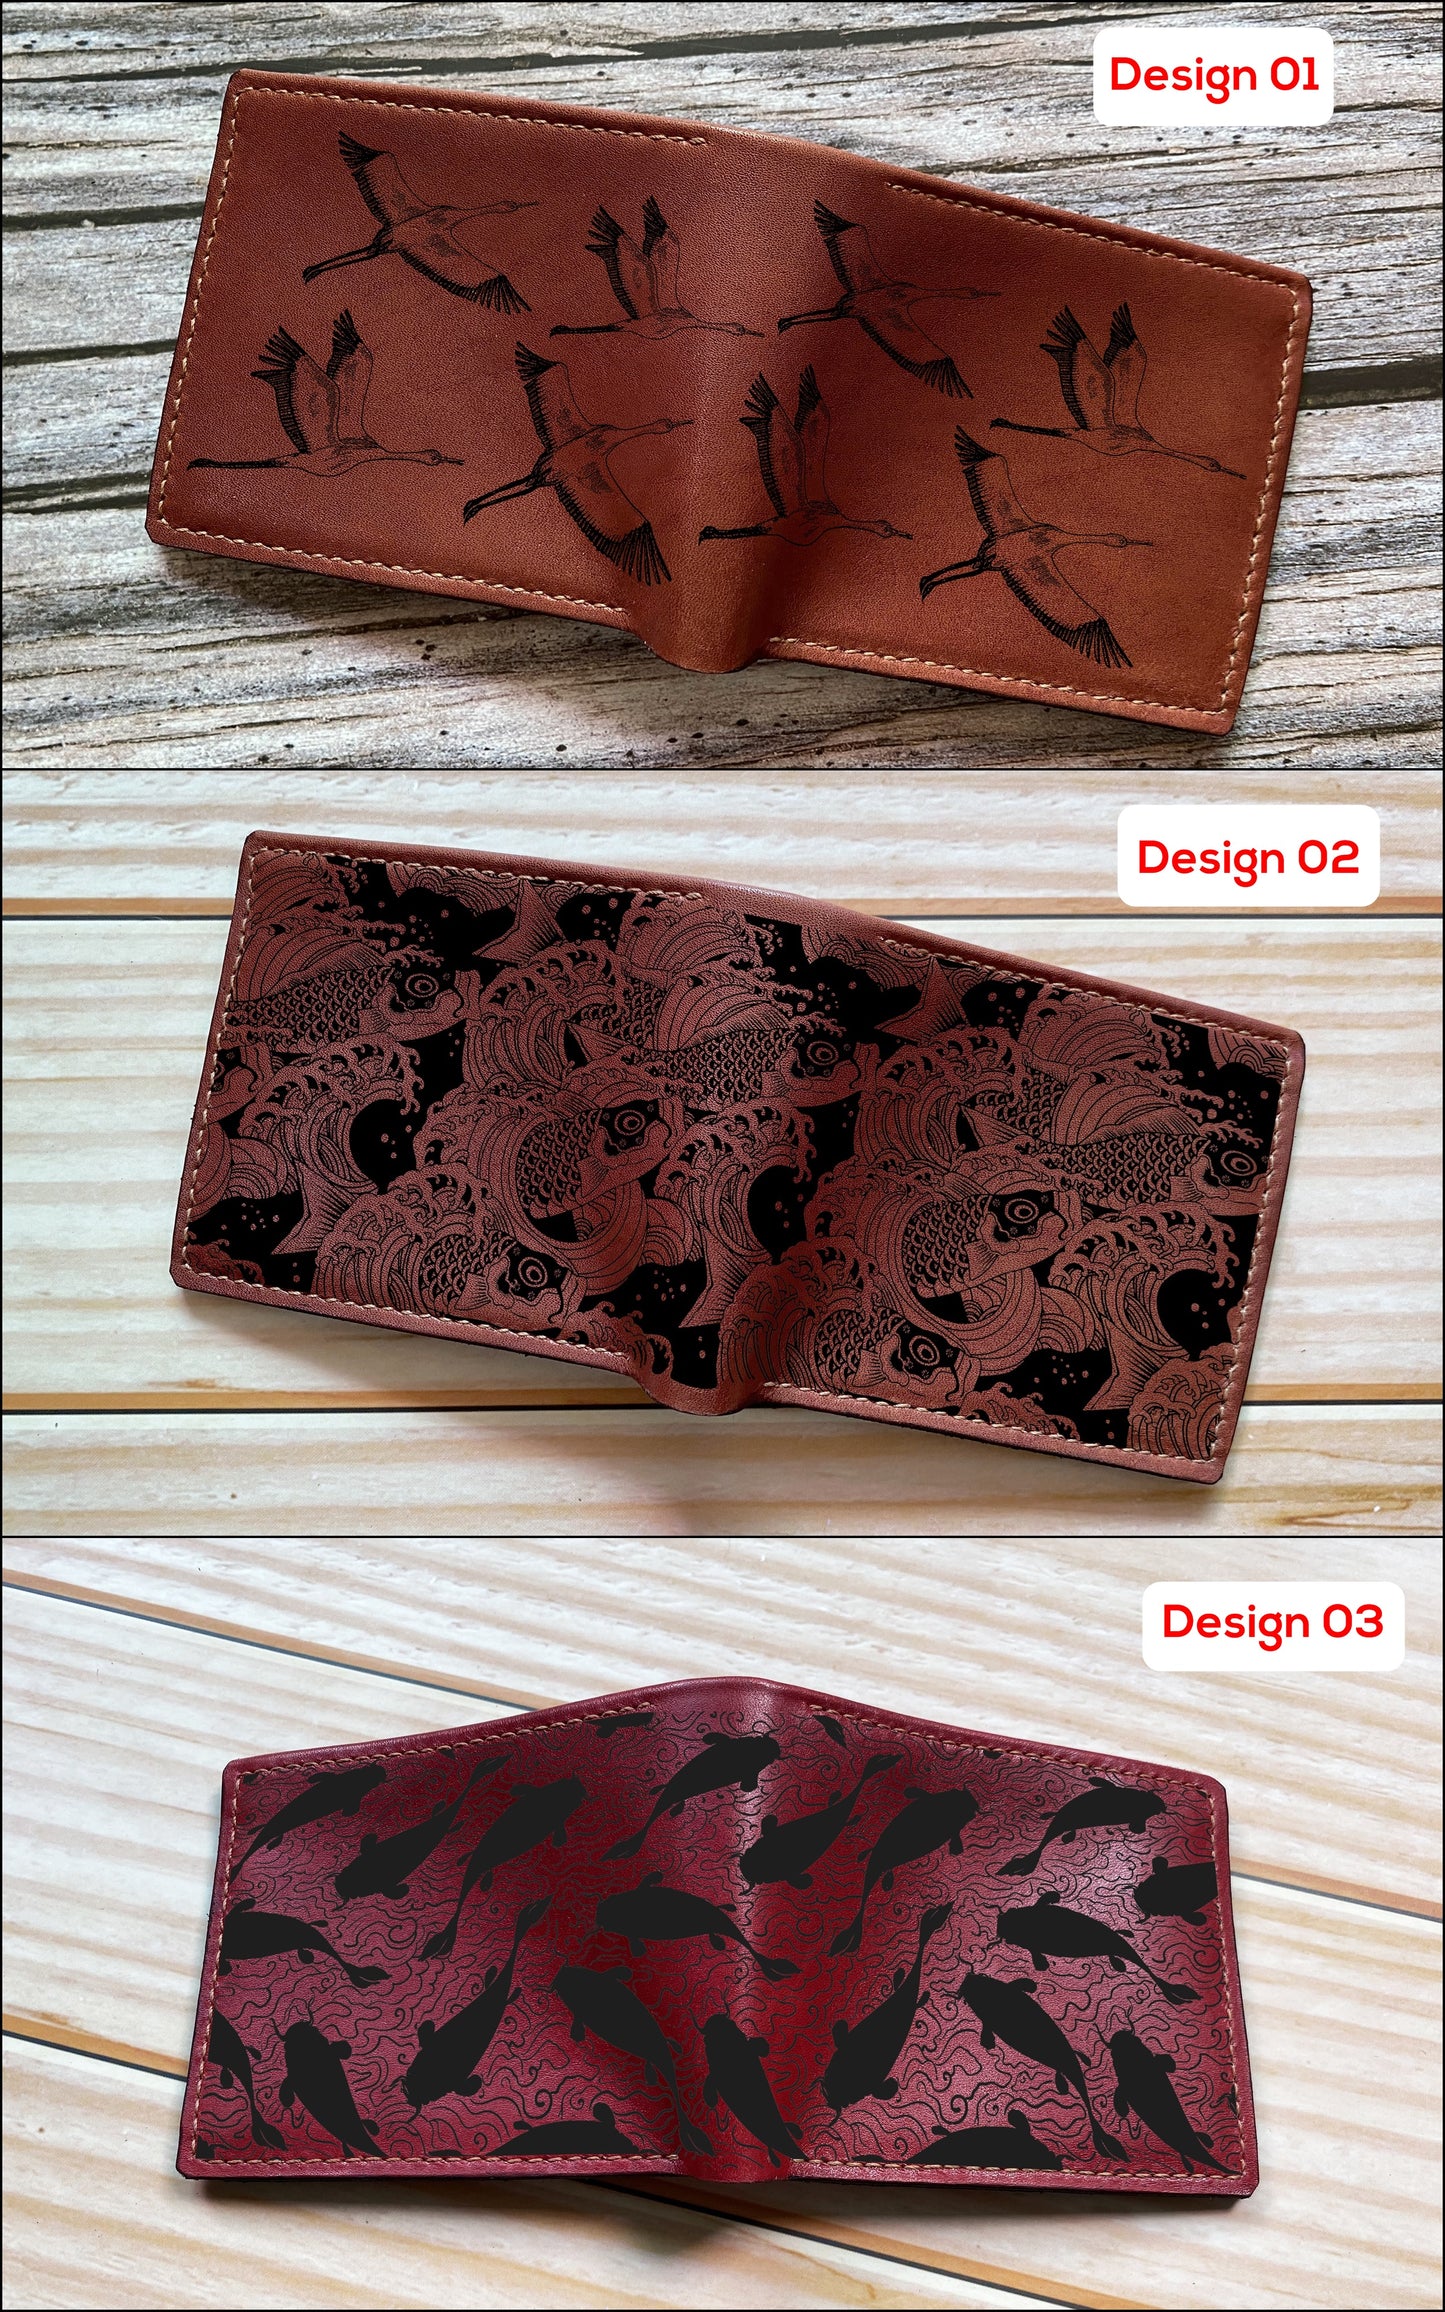 Mayan Corner - Customized leather handmade wallet, japanese pattern art wallet, flying cranes bird wallet, leather anniversary gift for husband, boyfriend